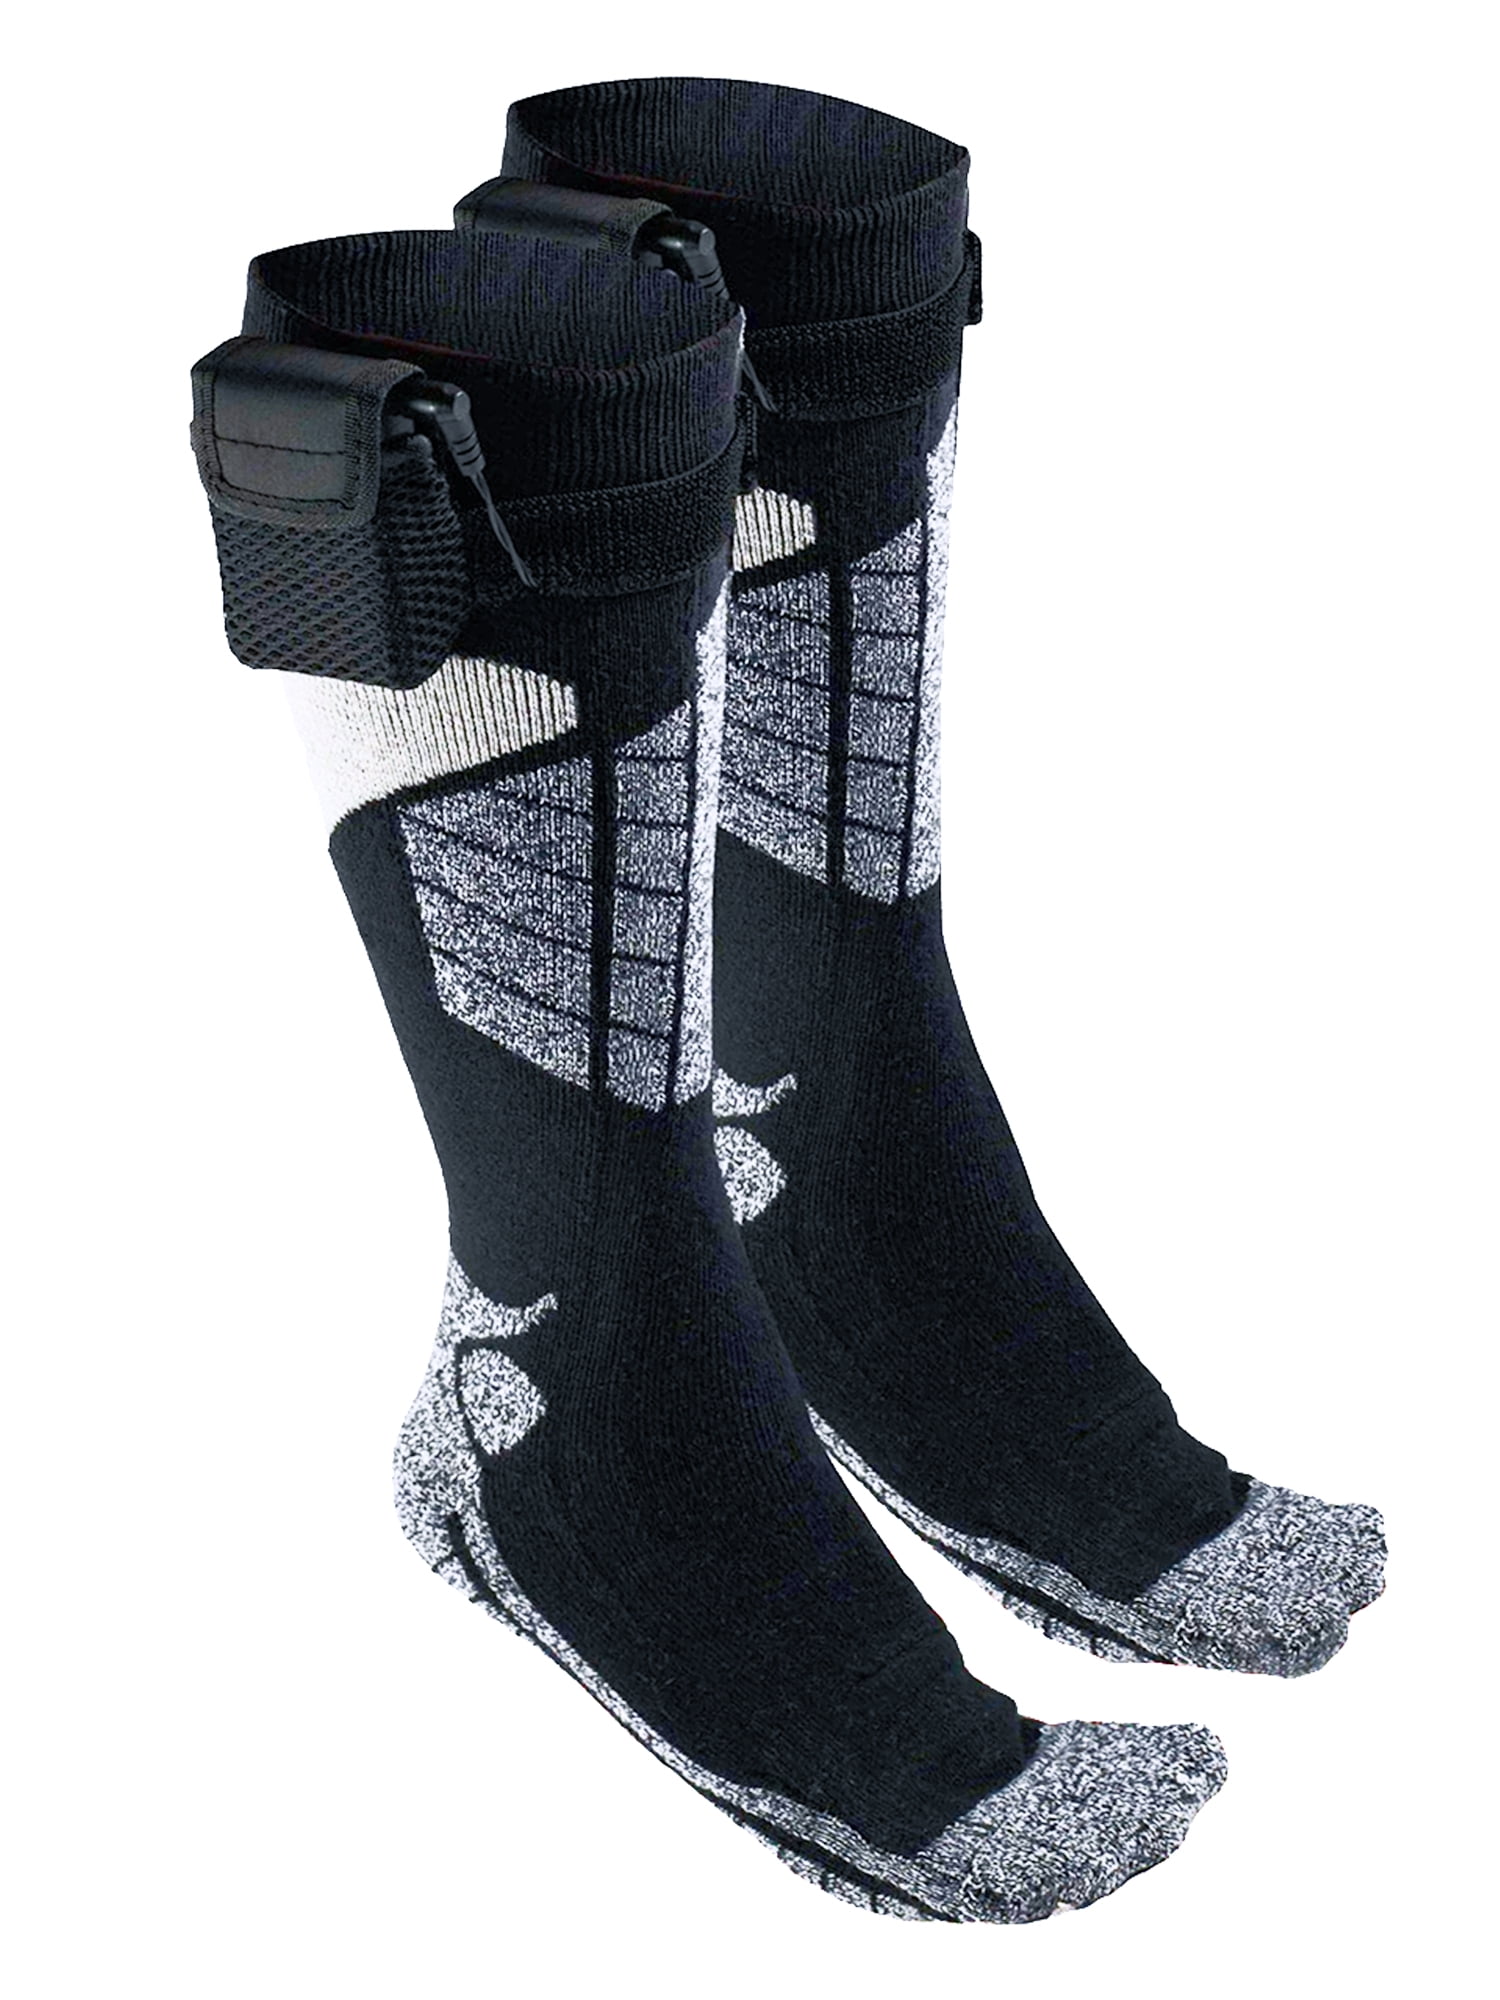 Warm Socks Battery Powered Unisex Electric Heated Socks Winter Black 1Pair A6S1 